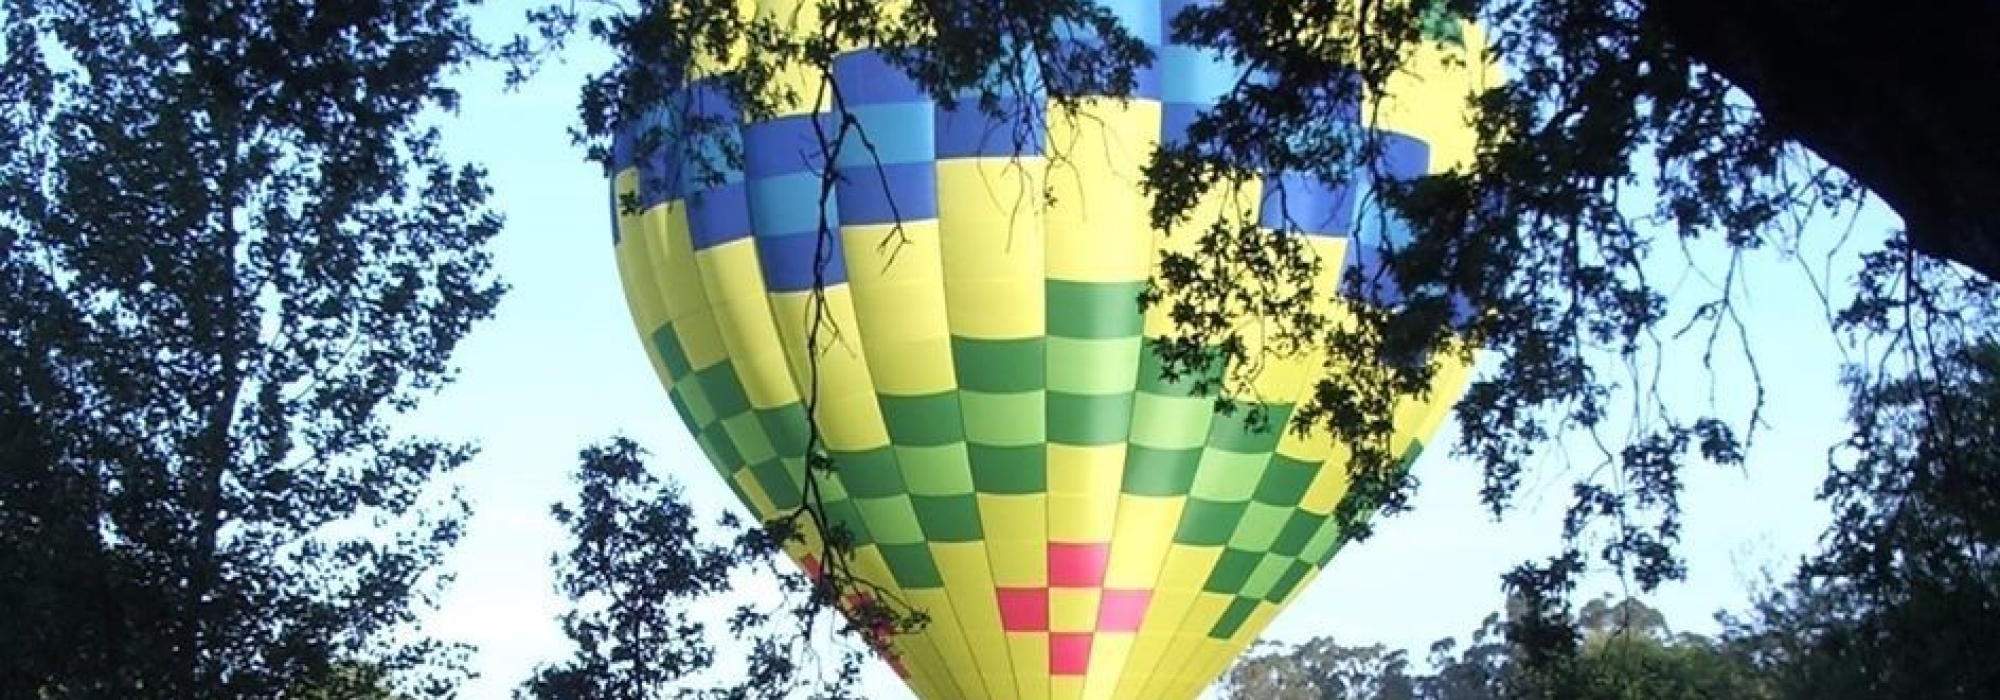 Ballooning-001